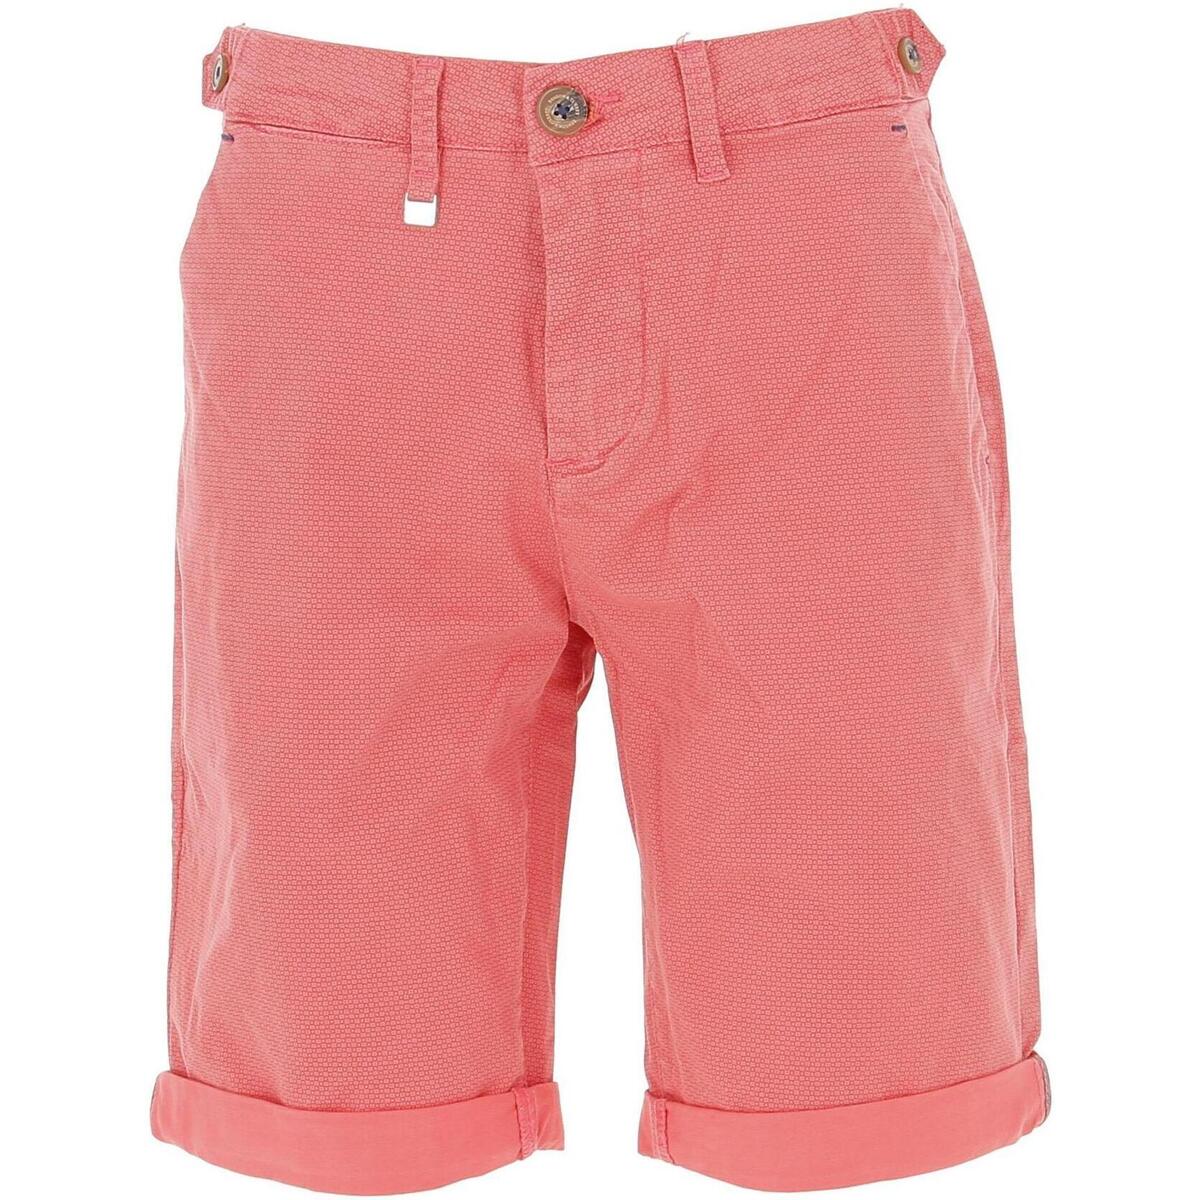 Vêtements Homme Shorts / Bermudas Benson&cherry Classic bermuda Orange